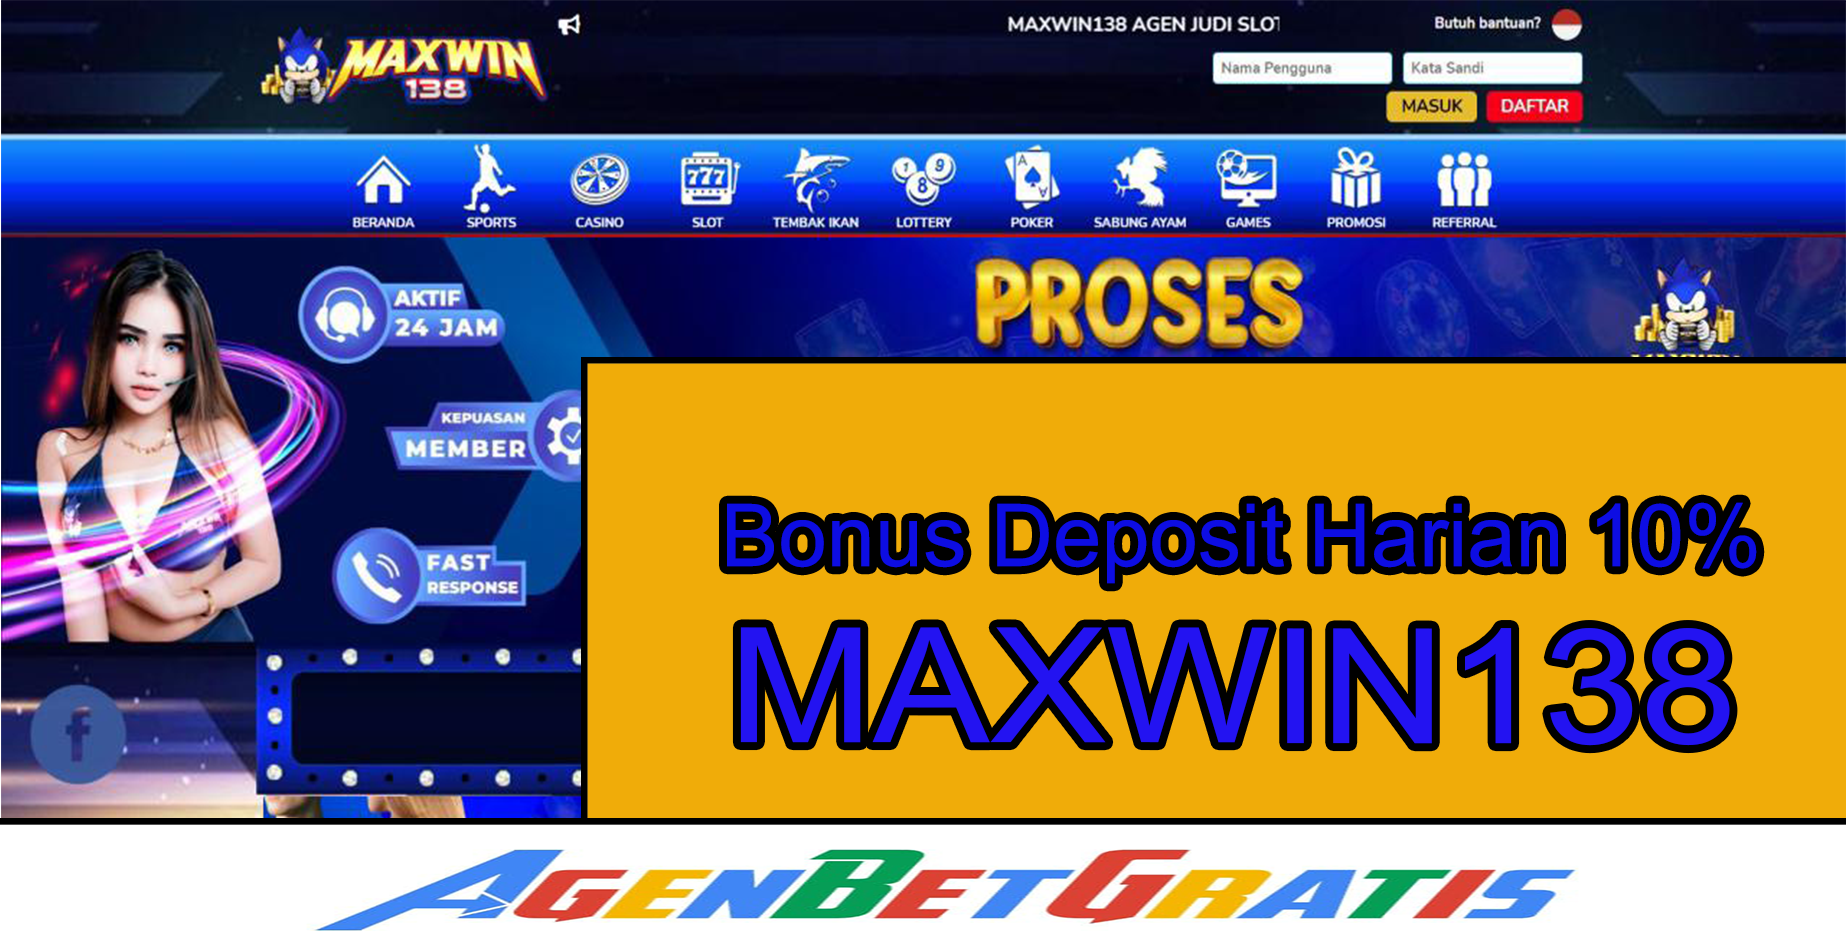 MAXWIN138 - Bonus Deposit Harian 10%